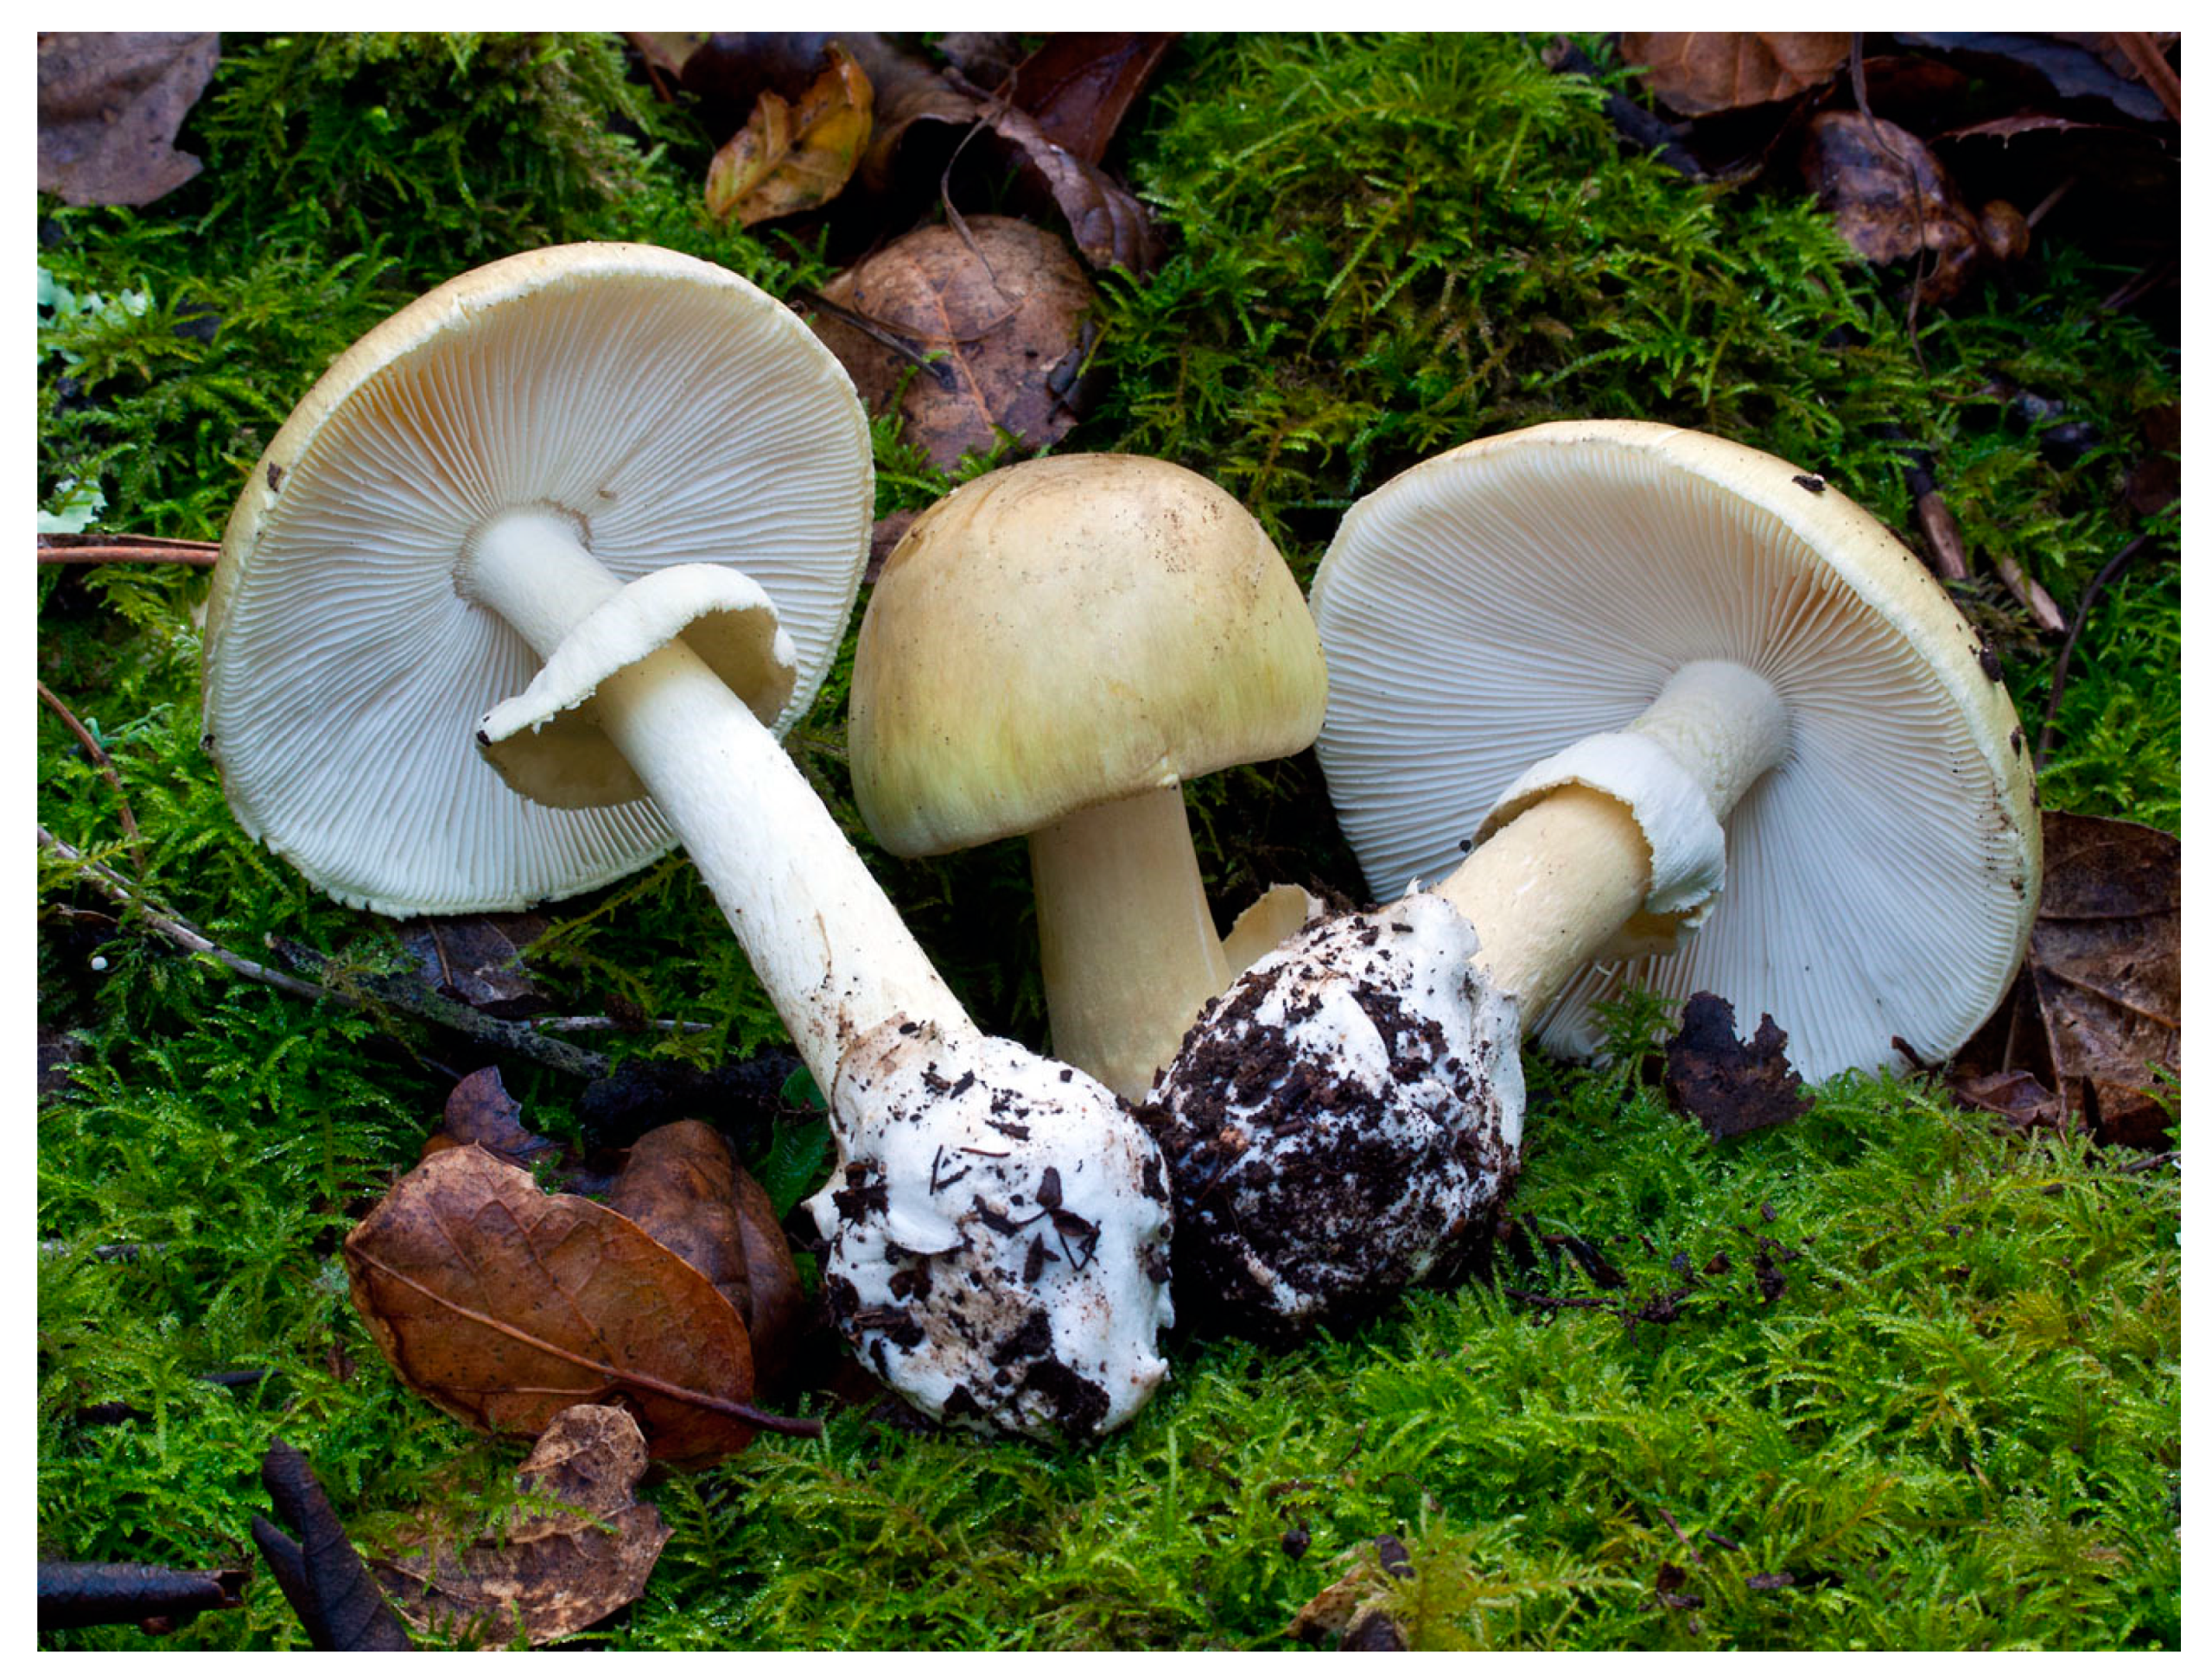 Растение поганка. Бледная поганка гриб. Аmanita phalloides – бледная поганка. Ядовитые грибы белая боганка. Бледная погоганка гриб.